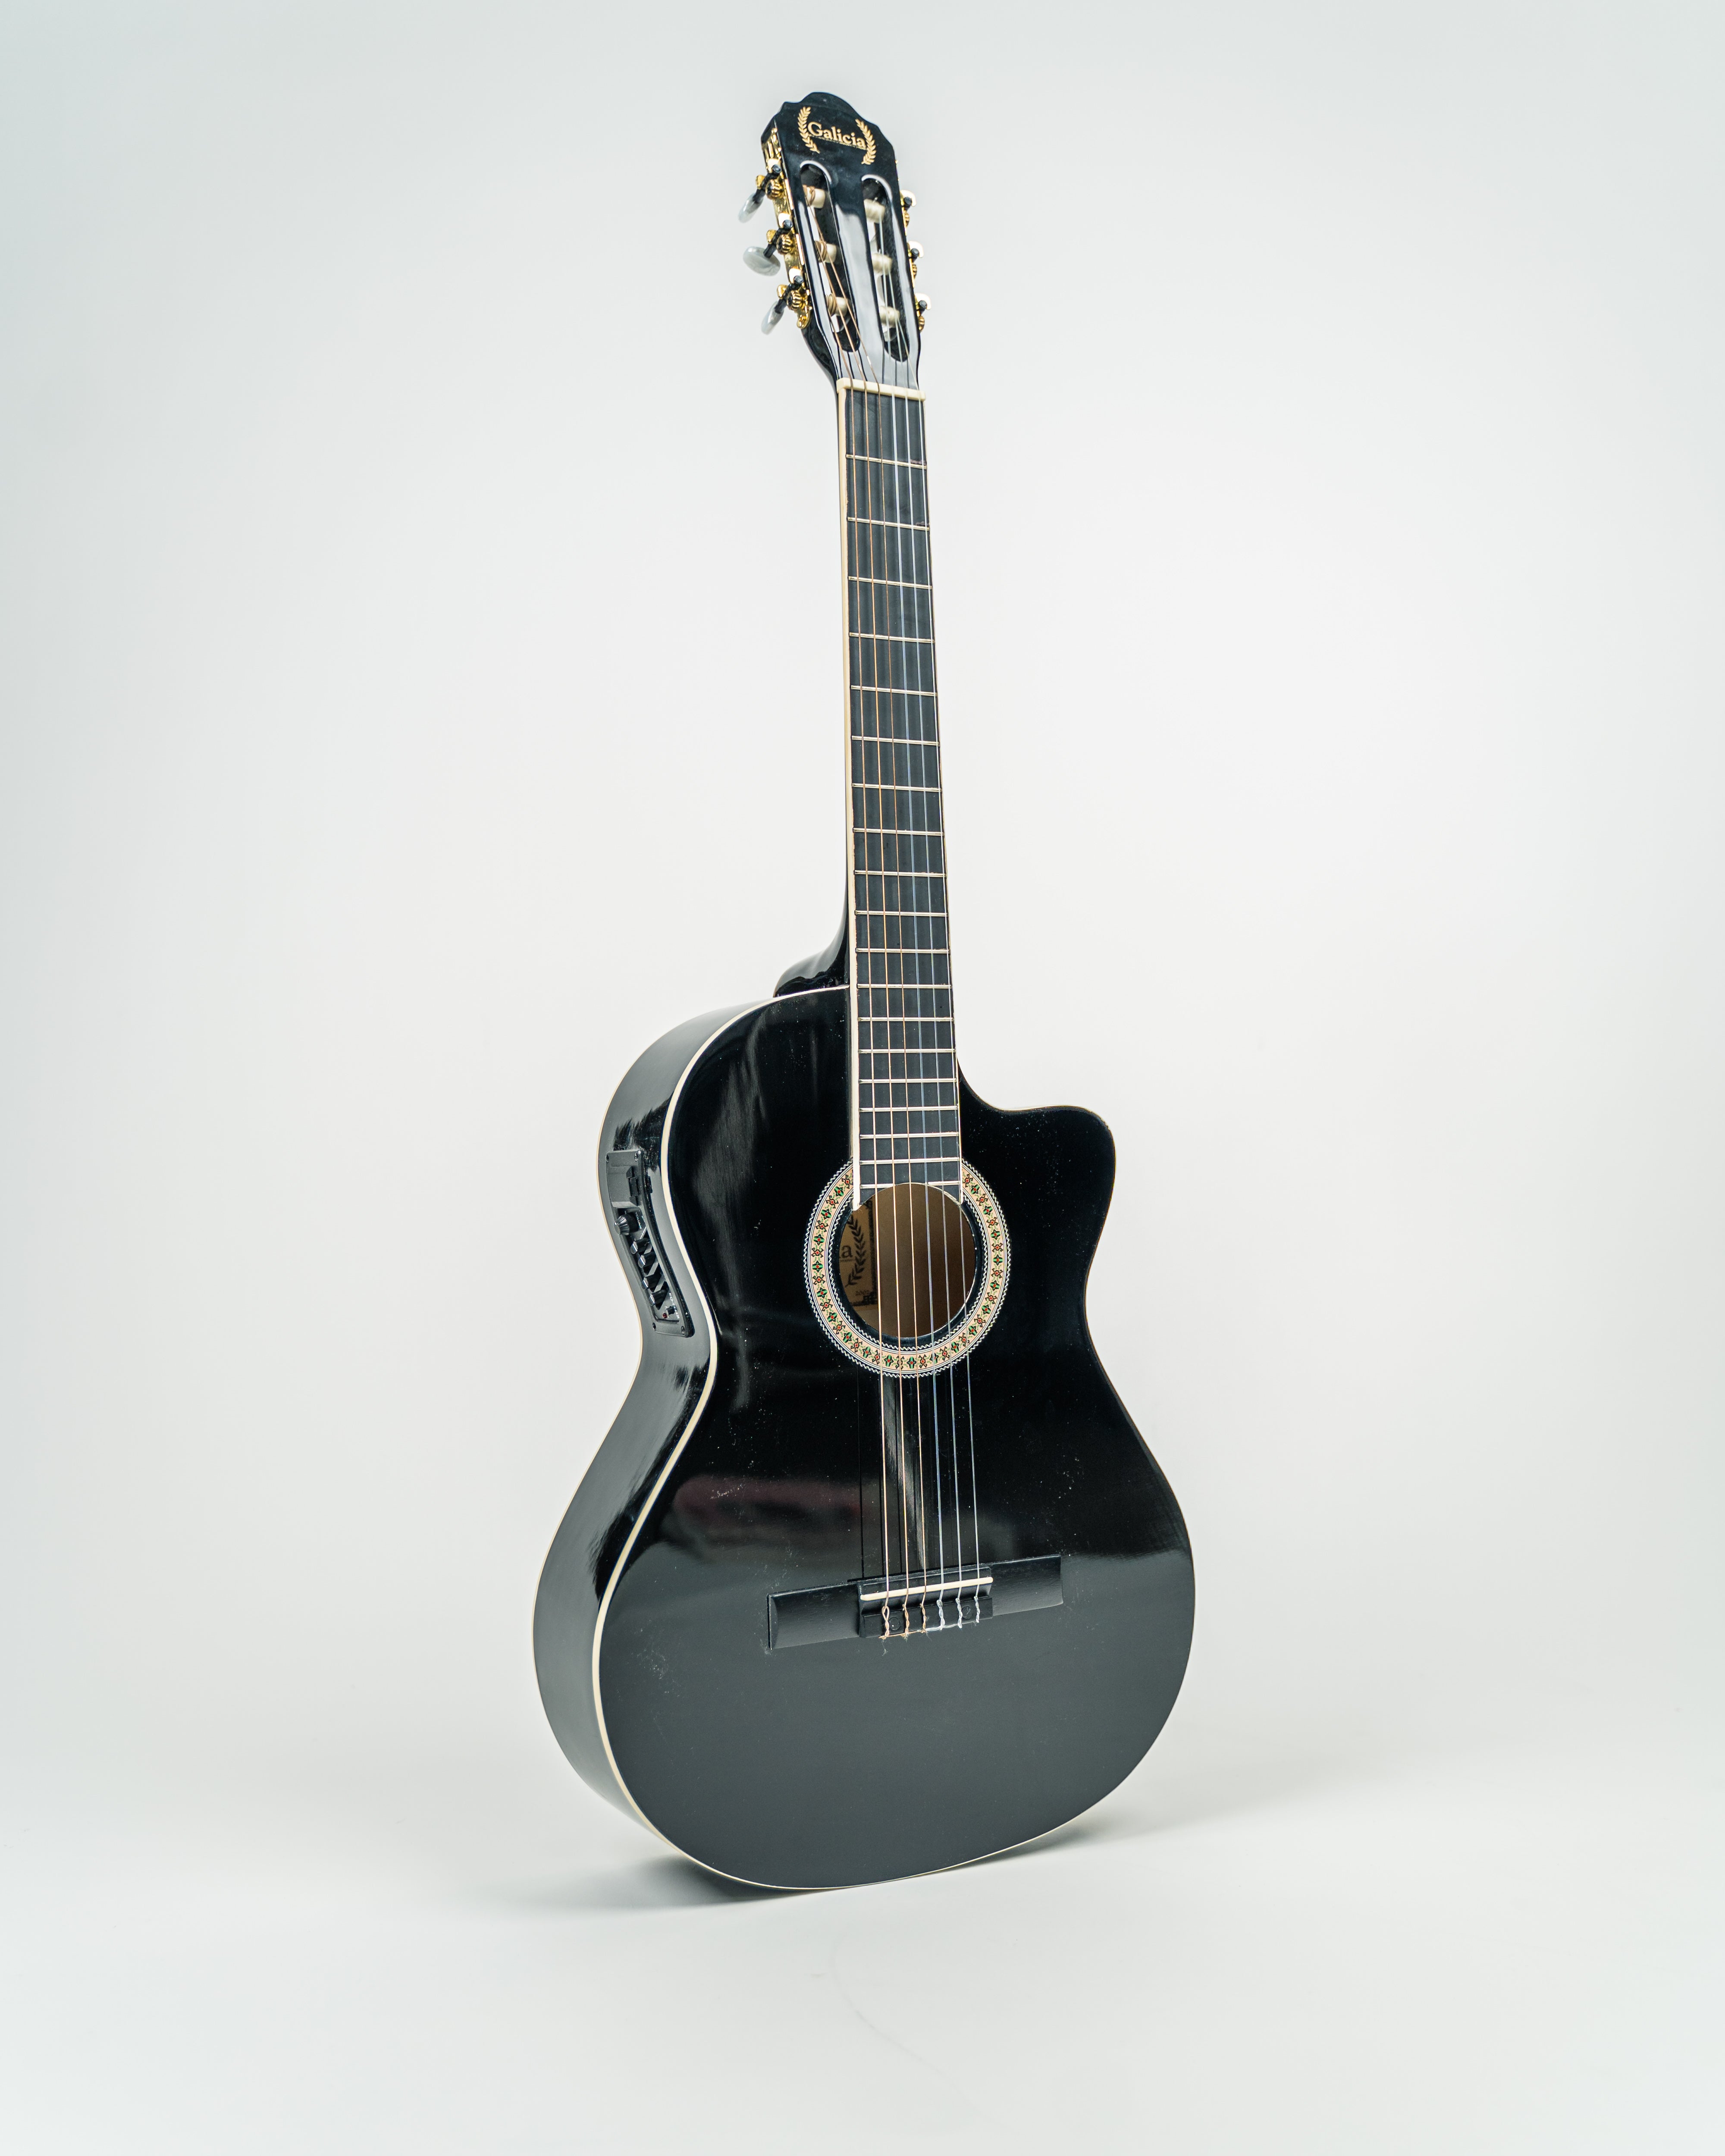 Galicia ESC-120CE 6-String Nylon 39" Cutaway Classical Guitar